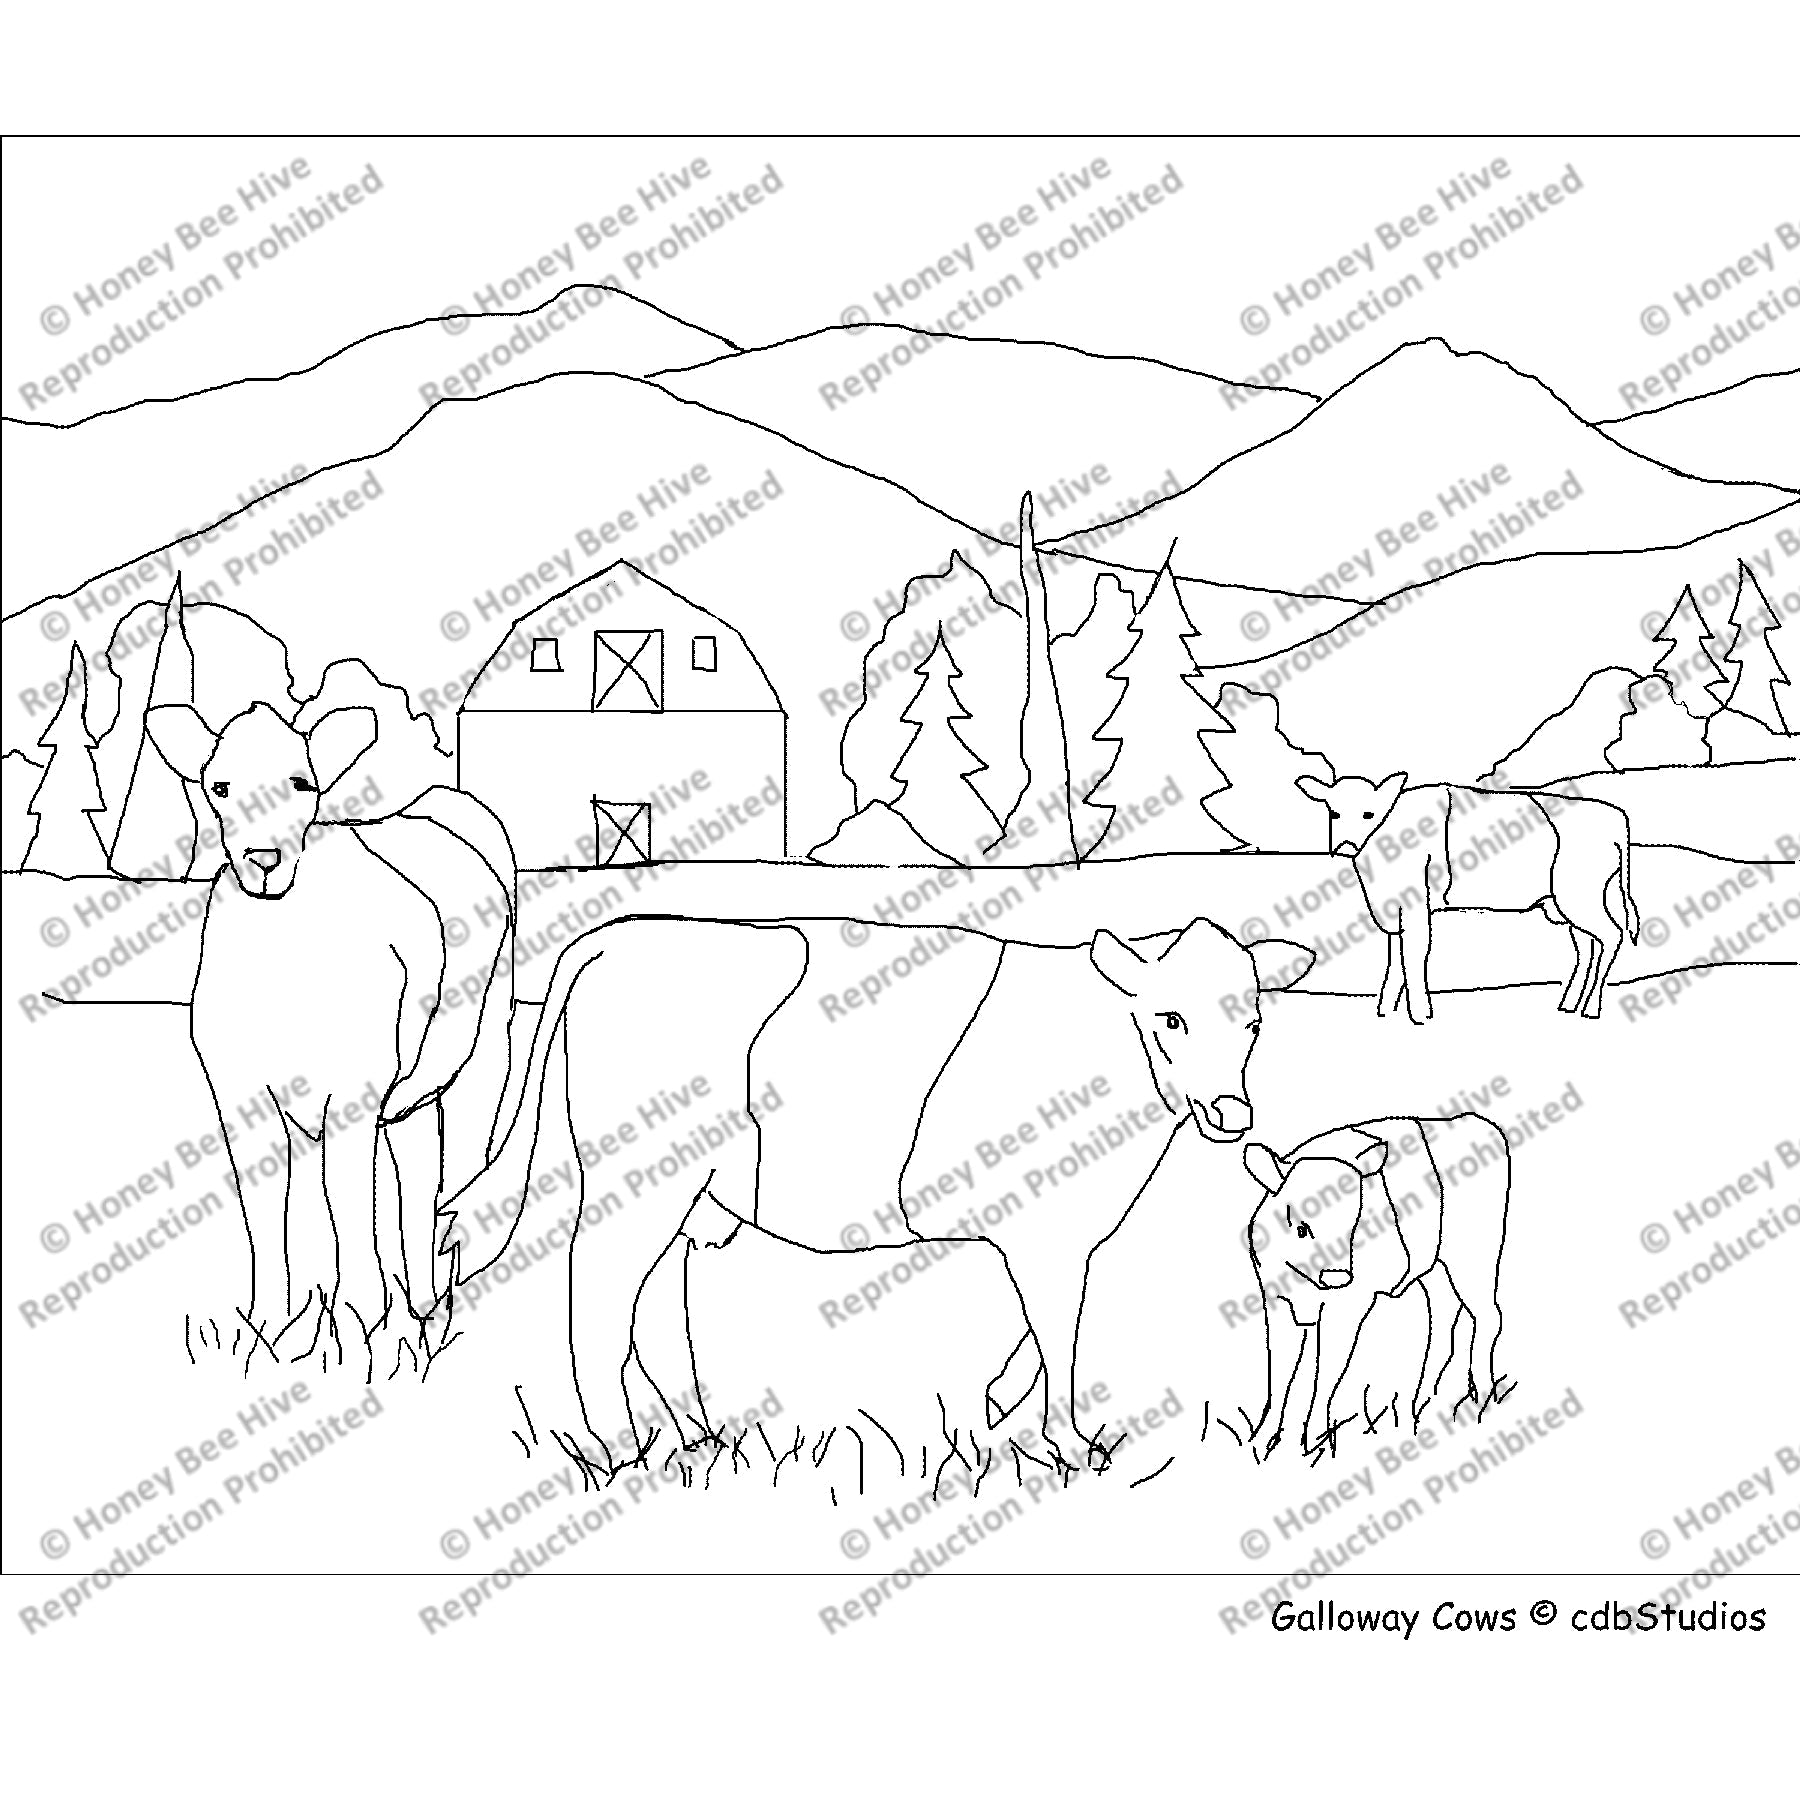 Galloway Cows, rug hooking pattern